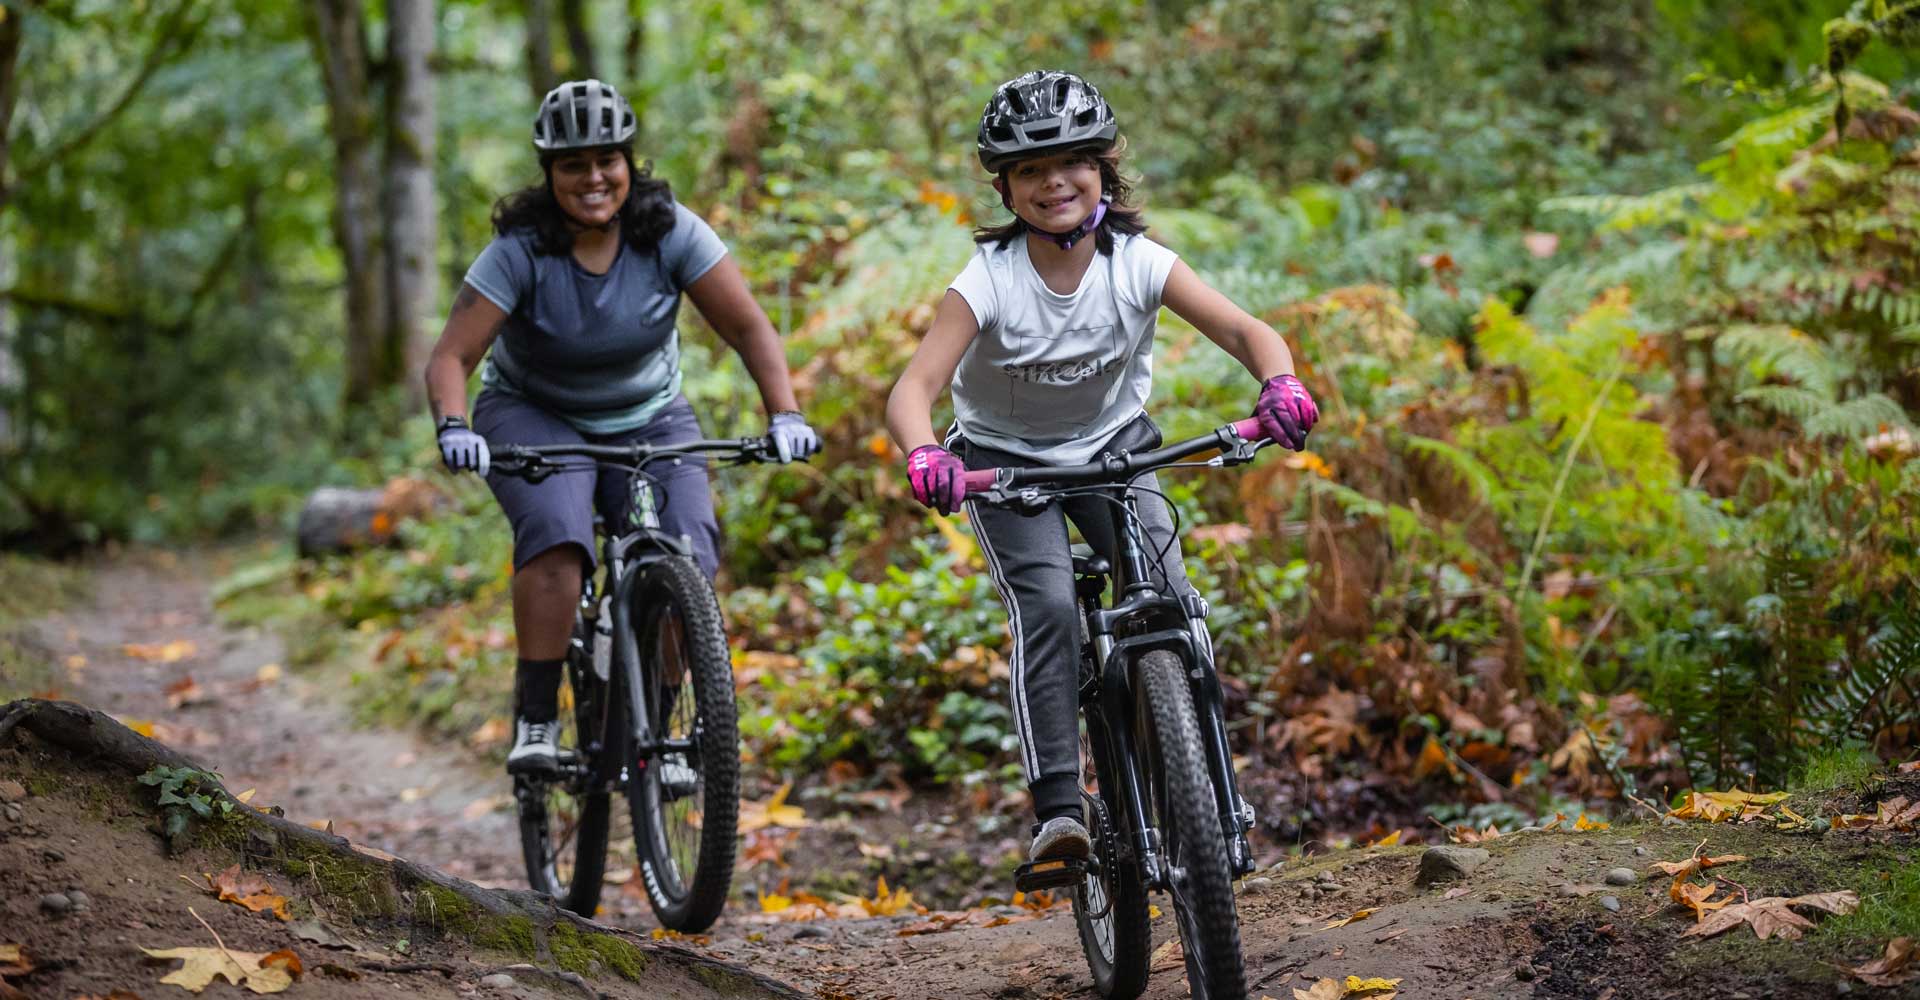 Benefits of Riding Mountain Bikes for Kids